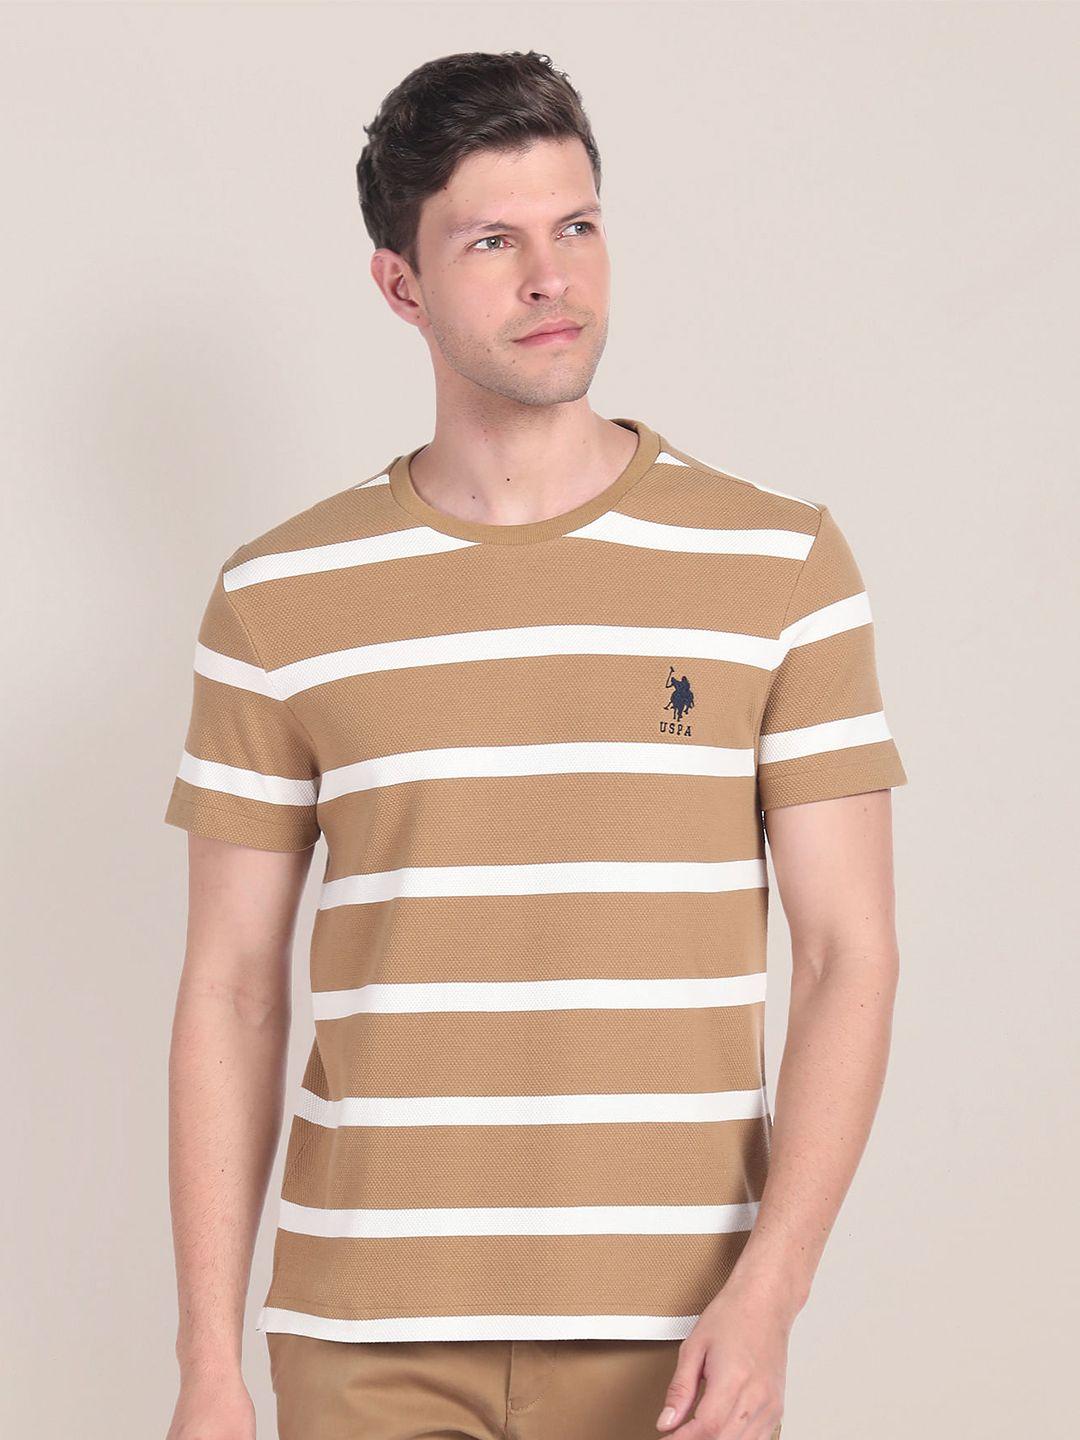 u.s. polo assn. horizontal striped casual t-shirt